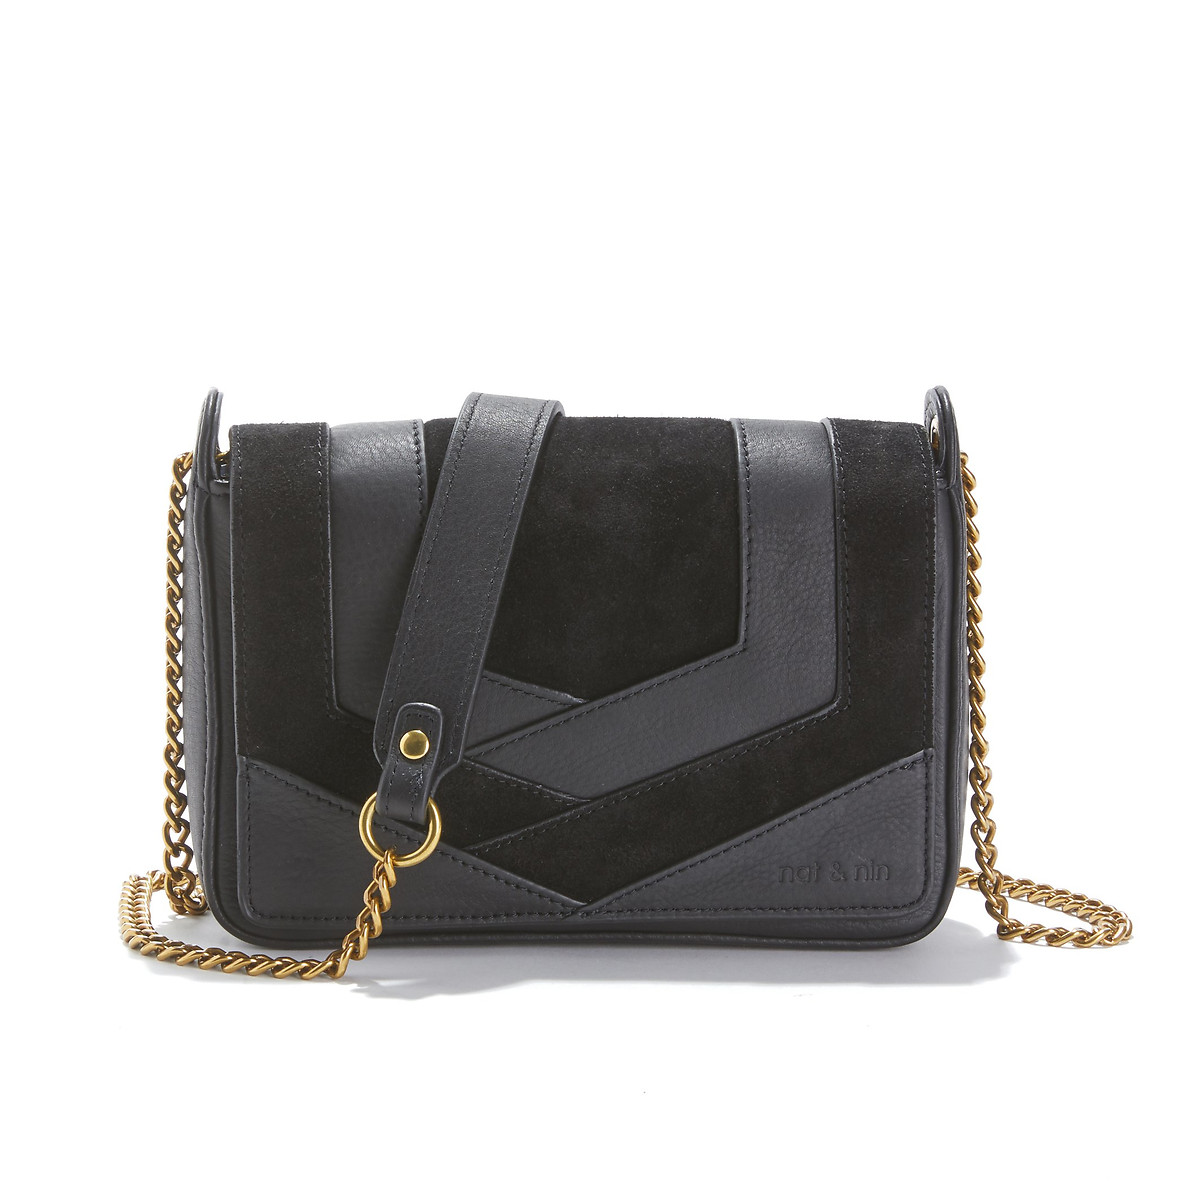 Capri Leather/Suede Flap Bag